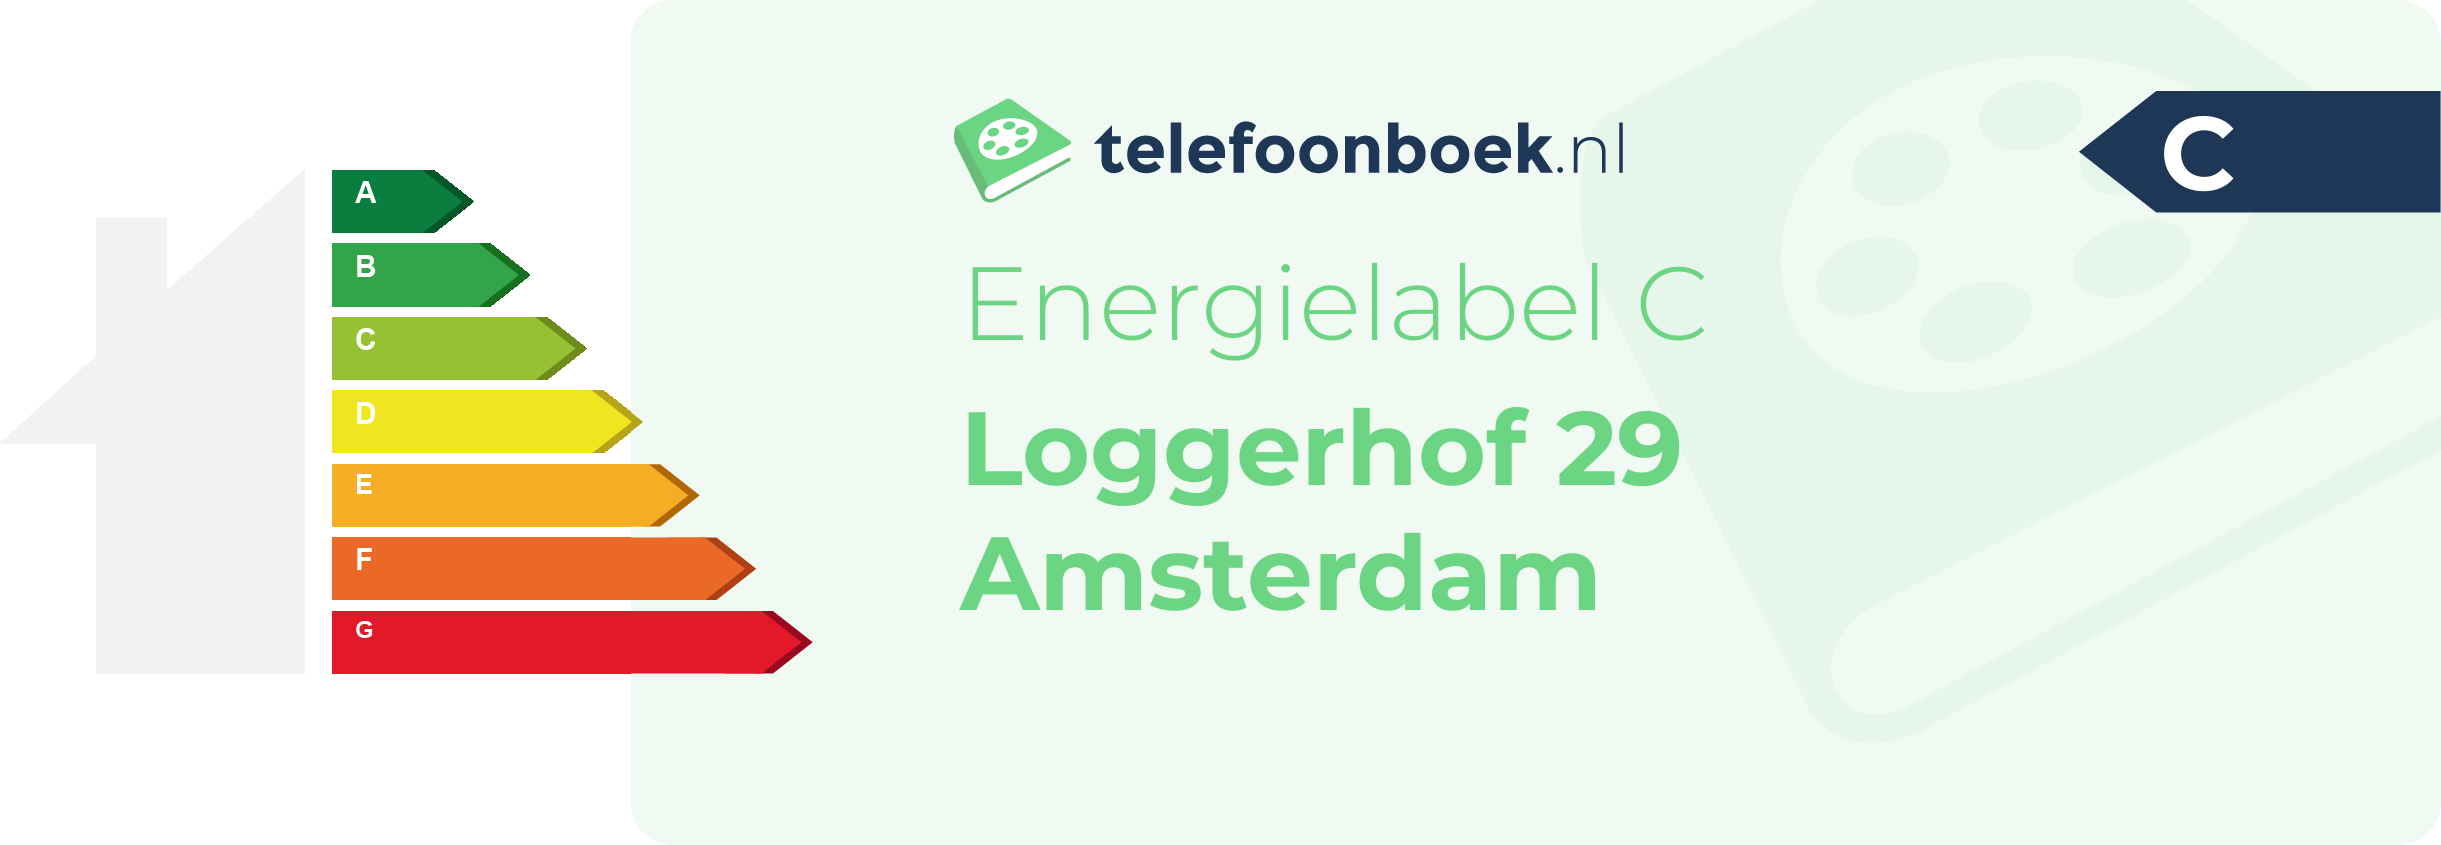 Energielabel Loggerhof 29 Amsterdam